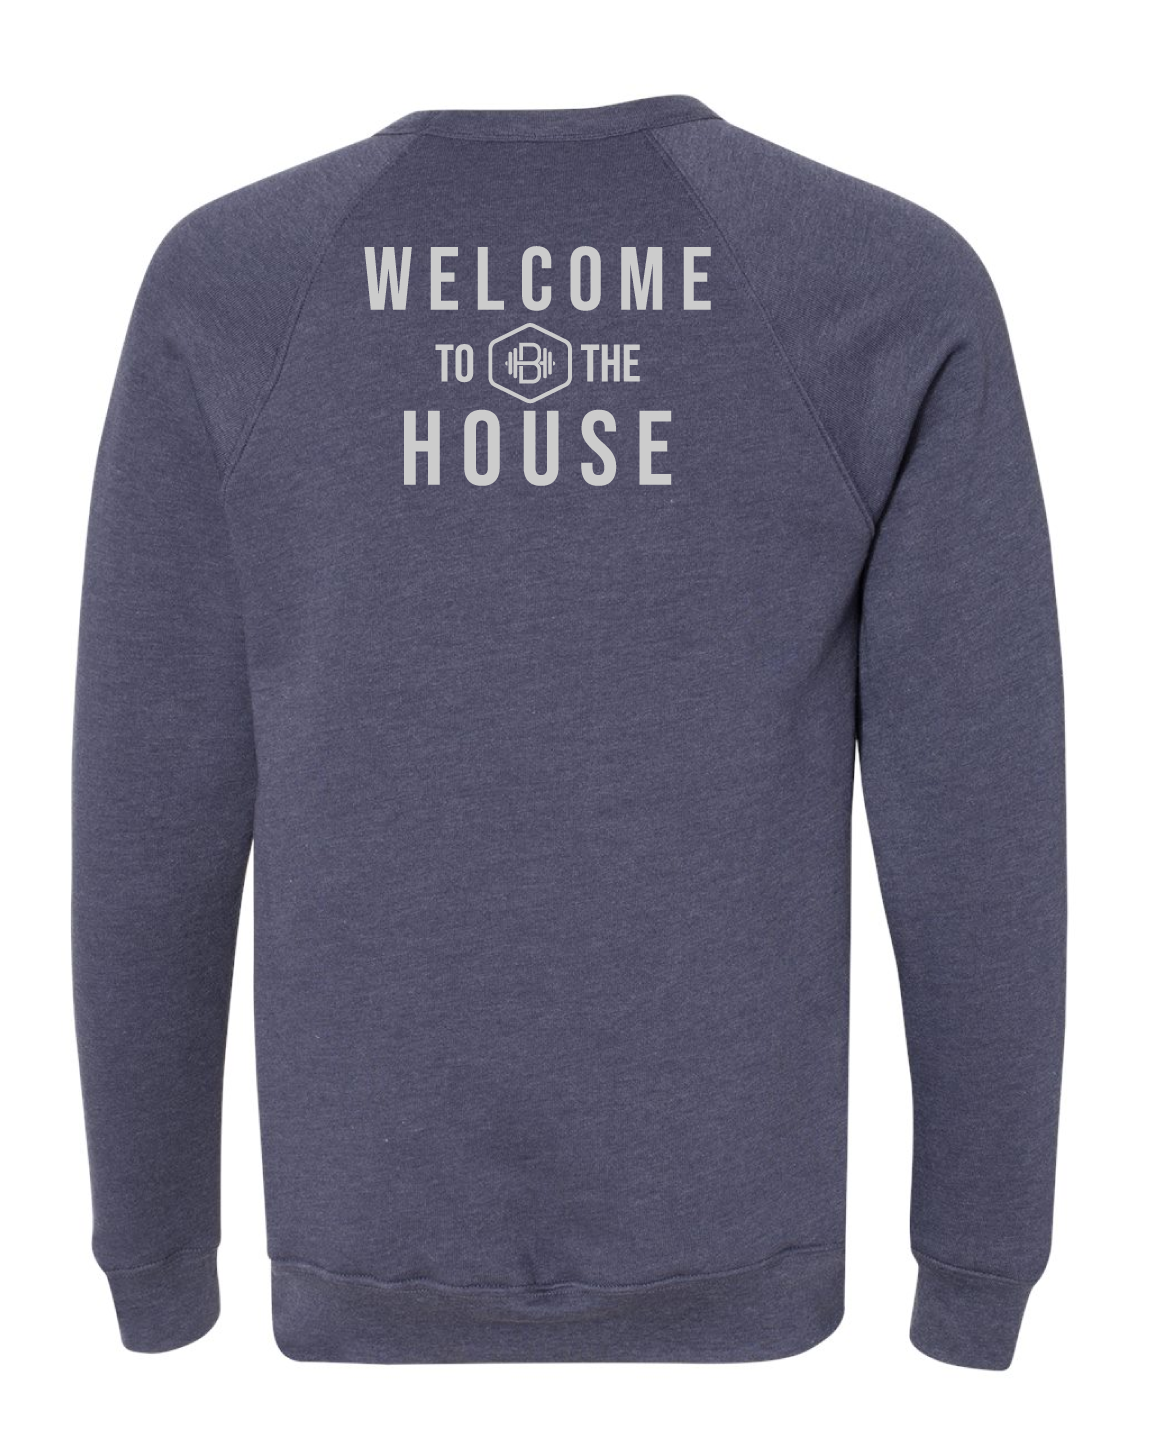 Bell House - WELCOME Unisex Premium Crewneck Sweatshirt